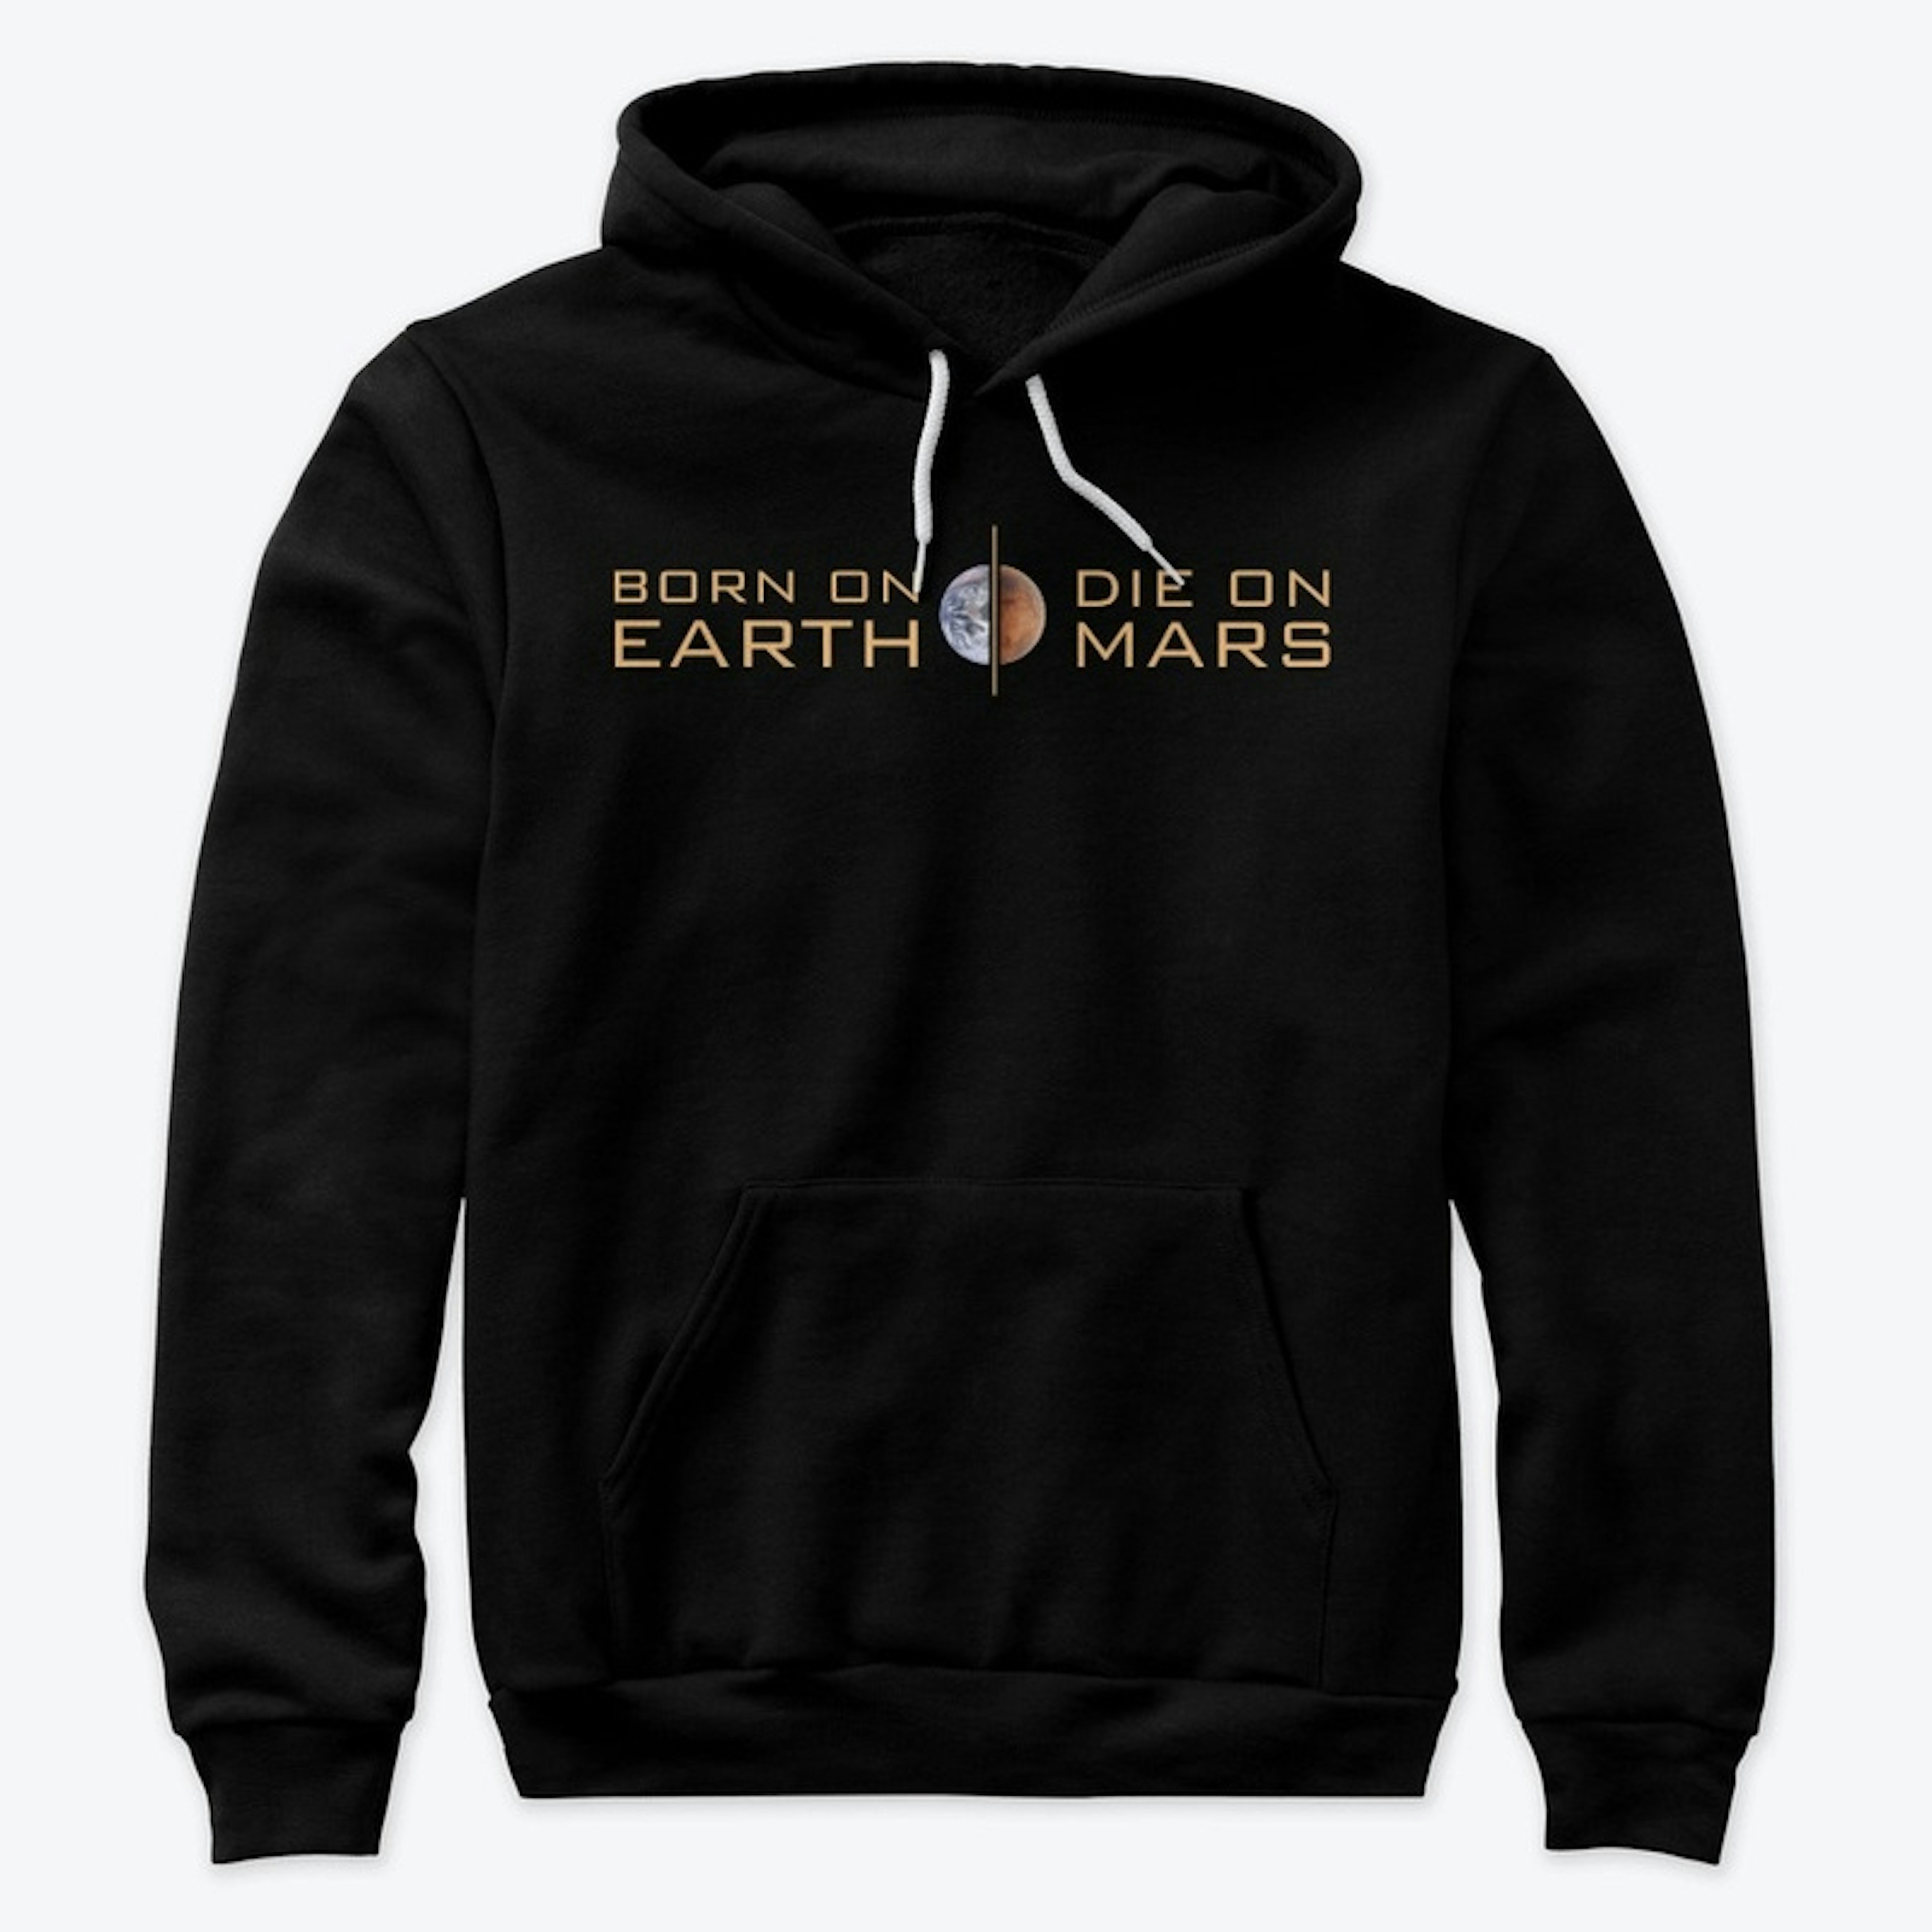 Born on Earth, Die on Mars (gold)